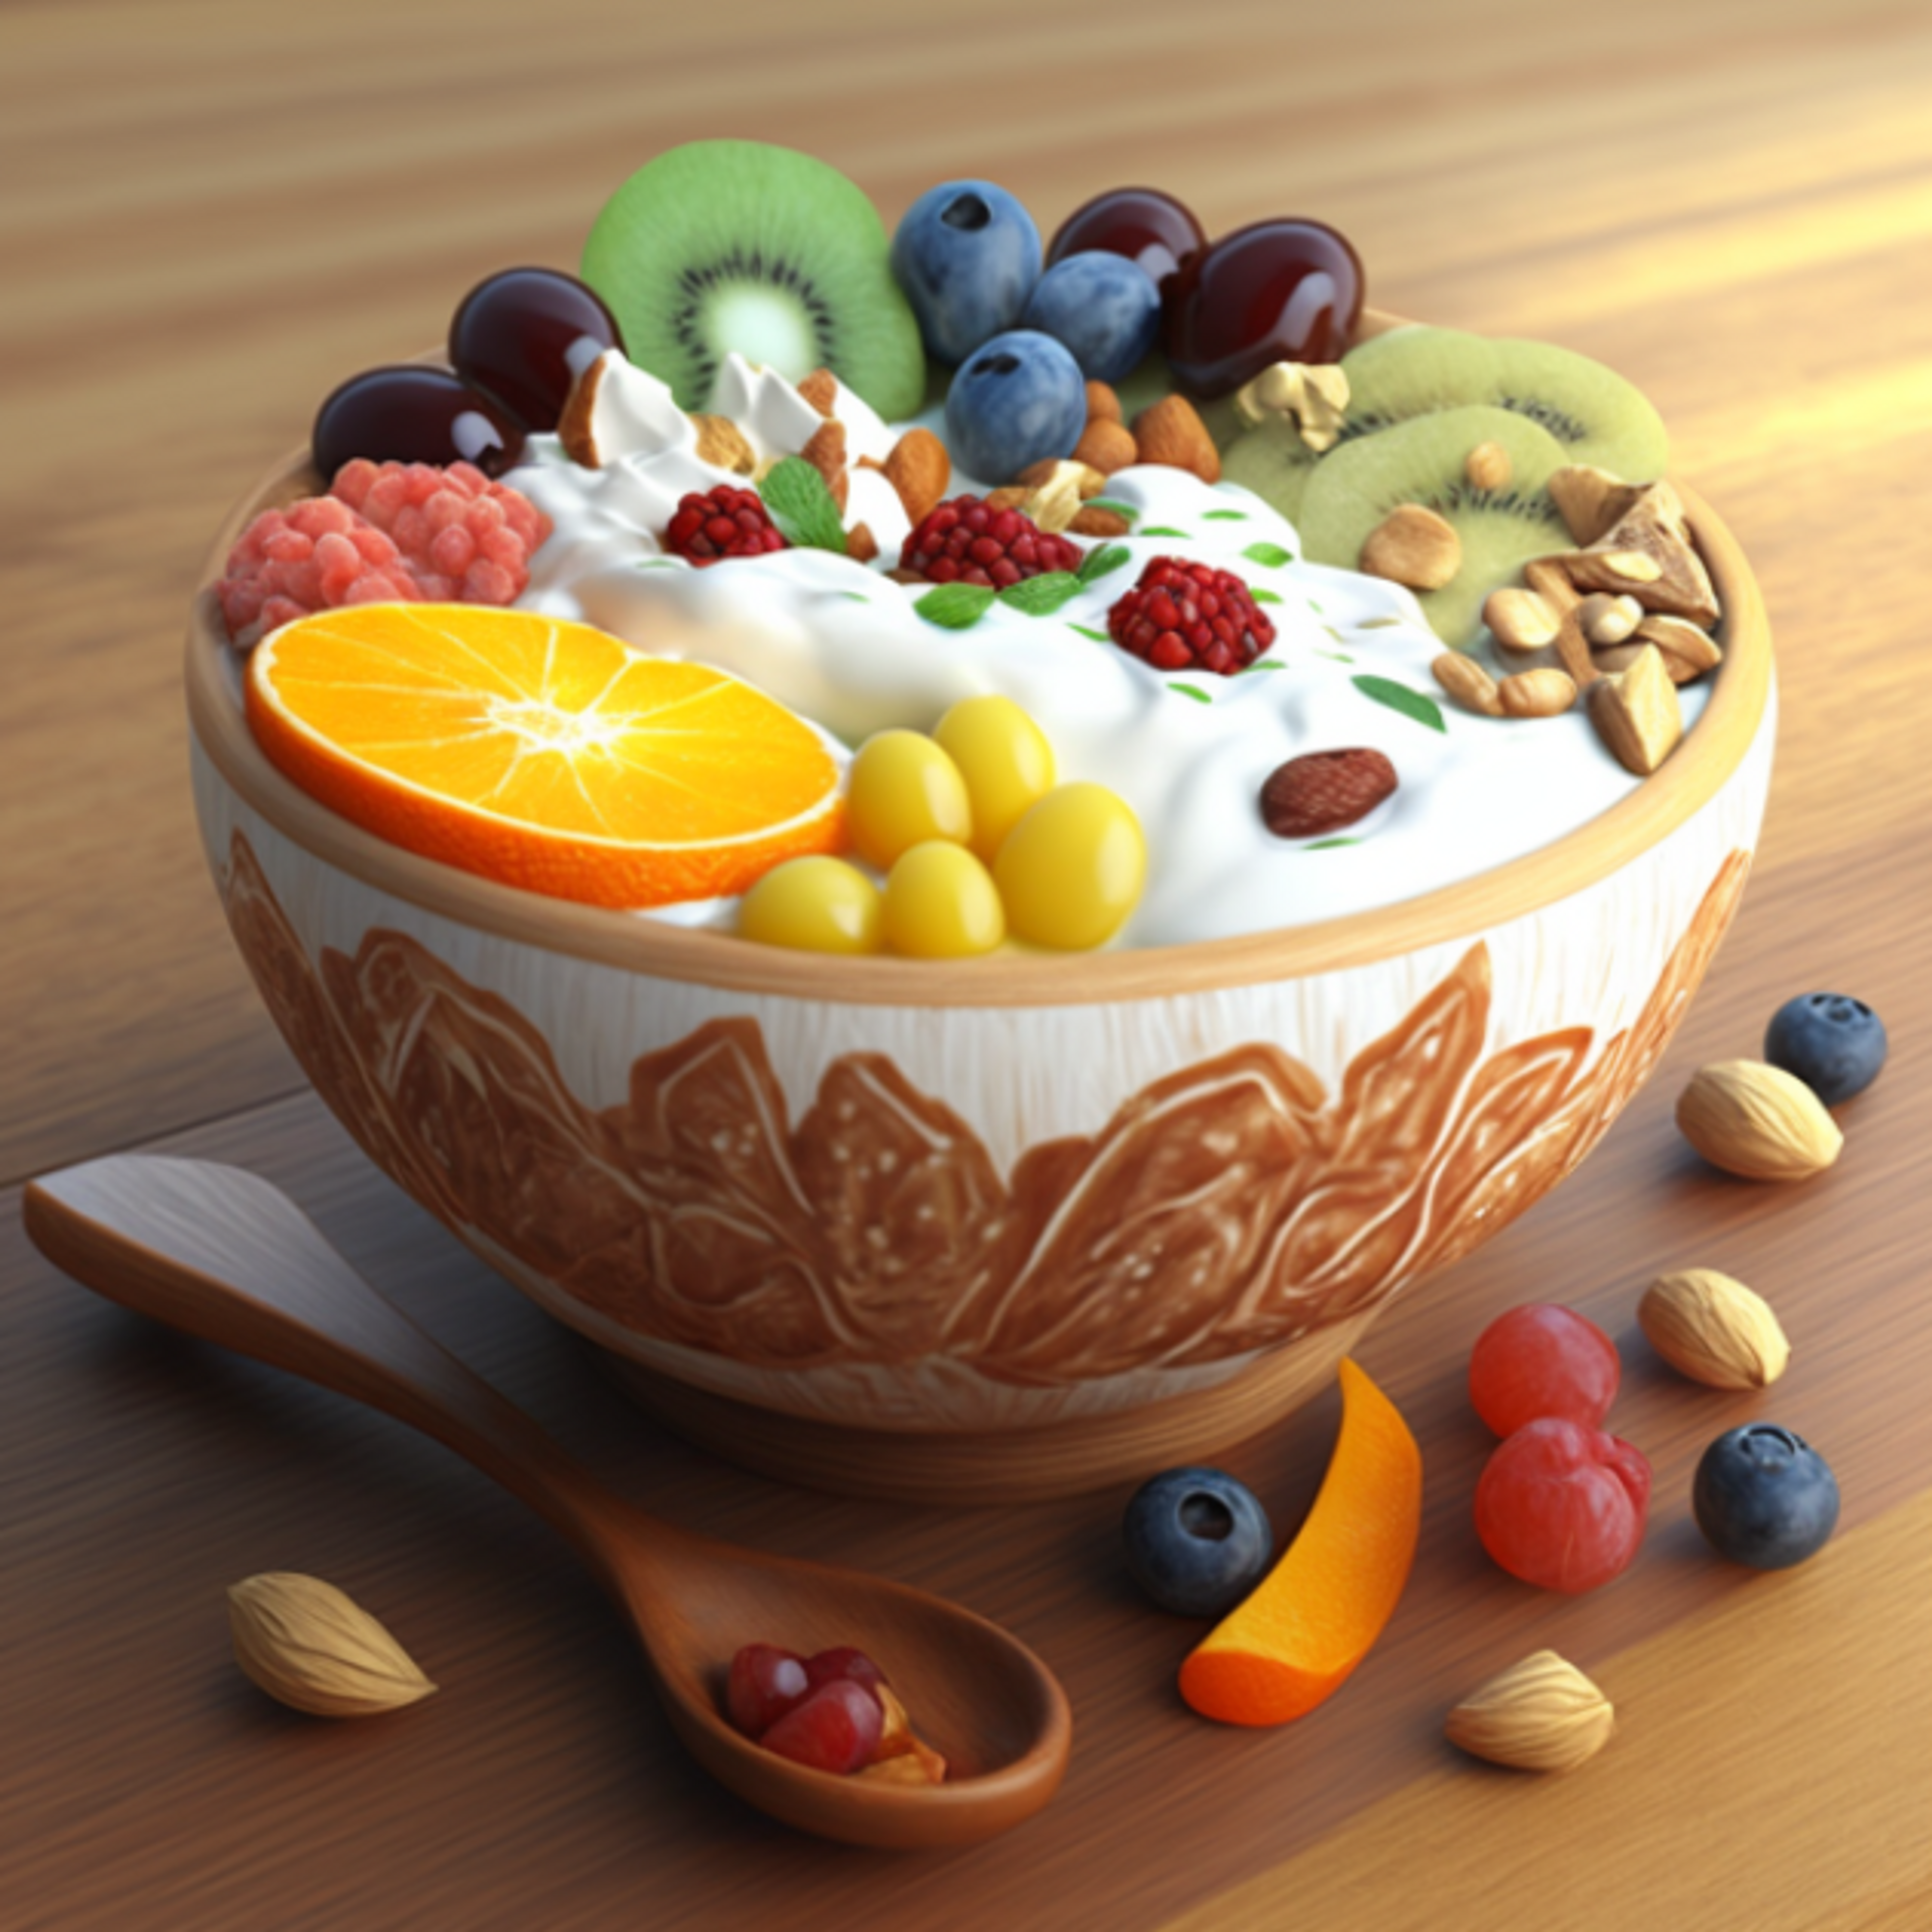 Greek yogurt with fruits and nuts